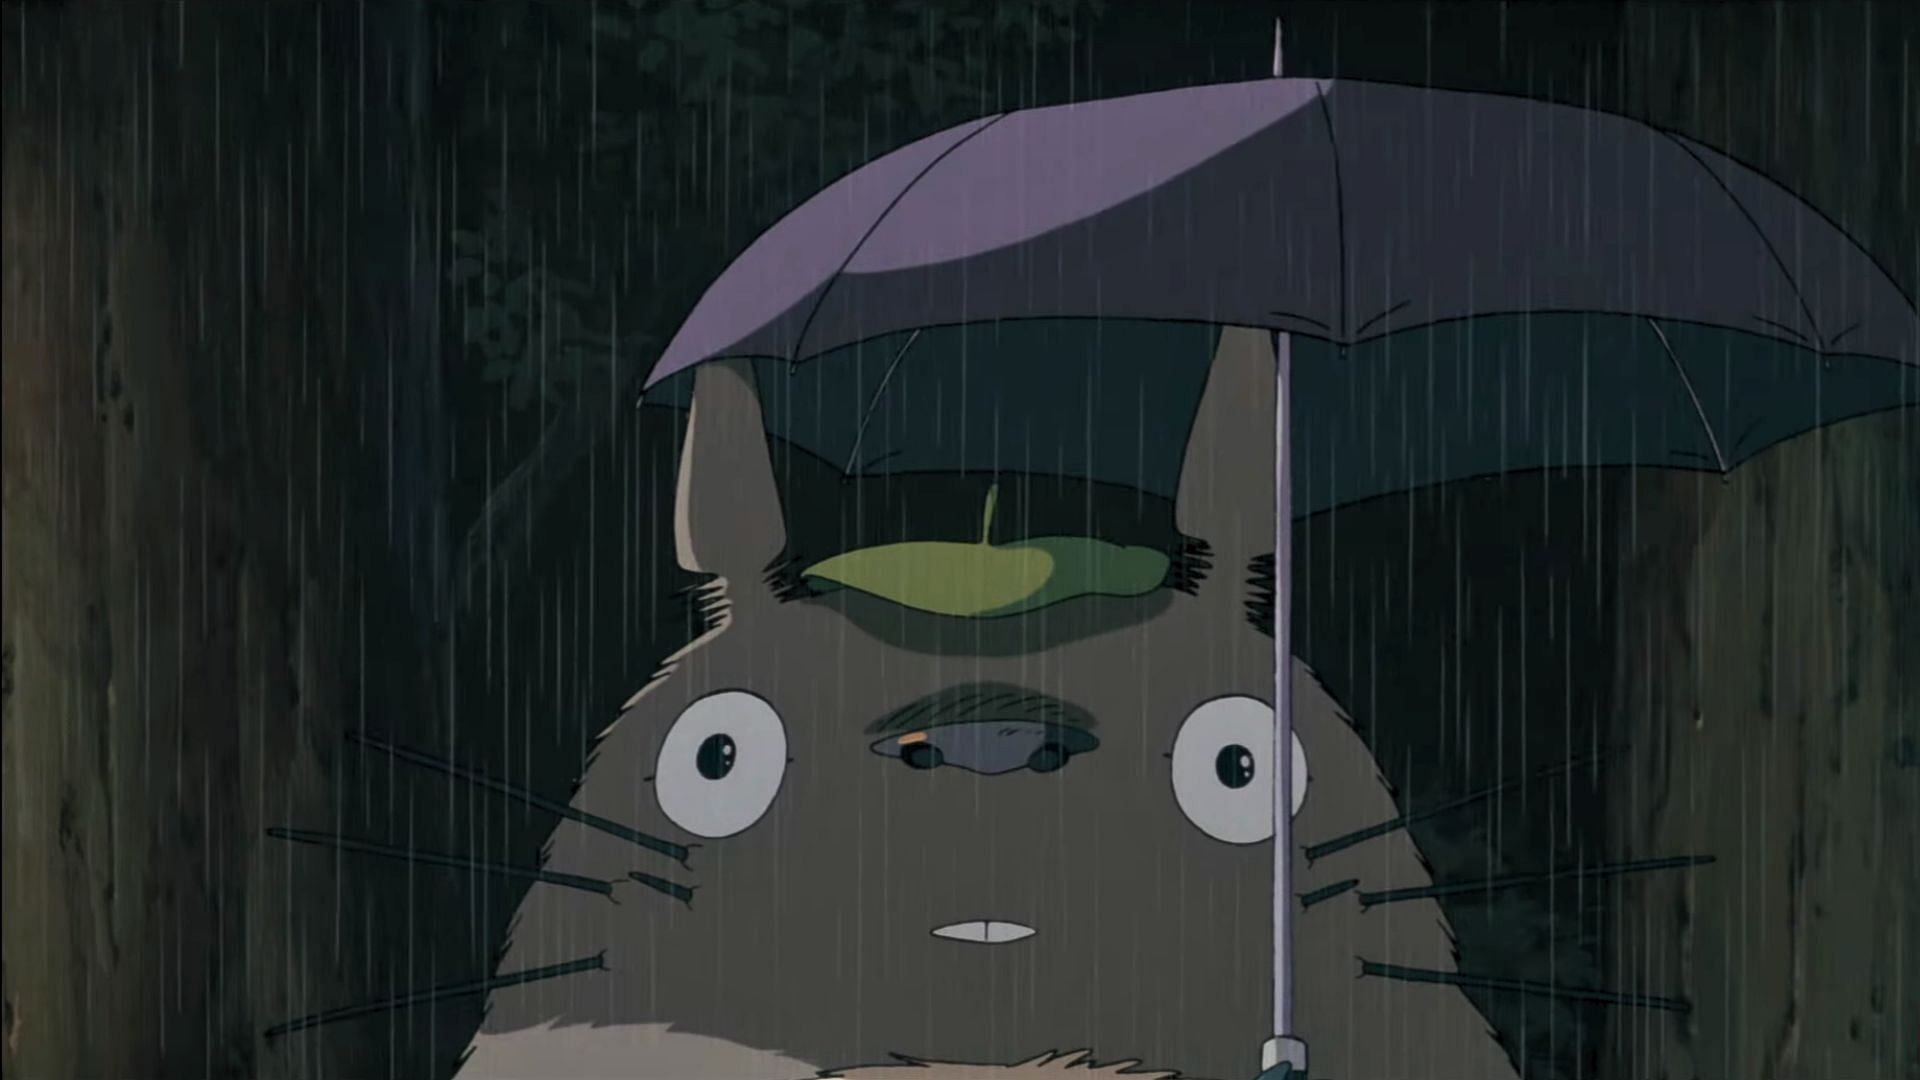 Still from My Neighbor Totoro (Image via Studio Ghibli)